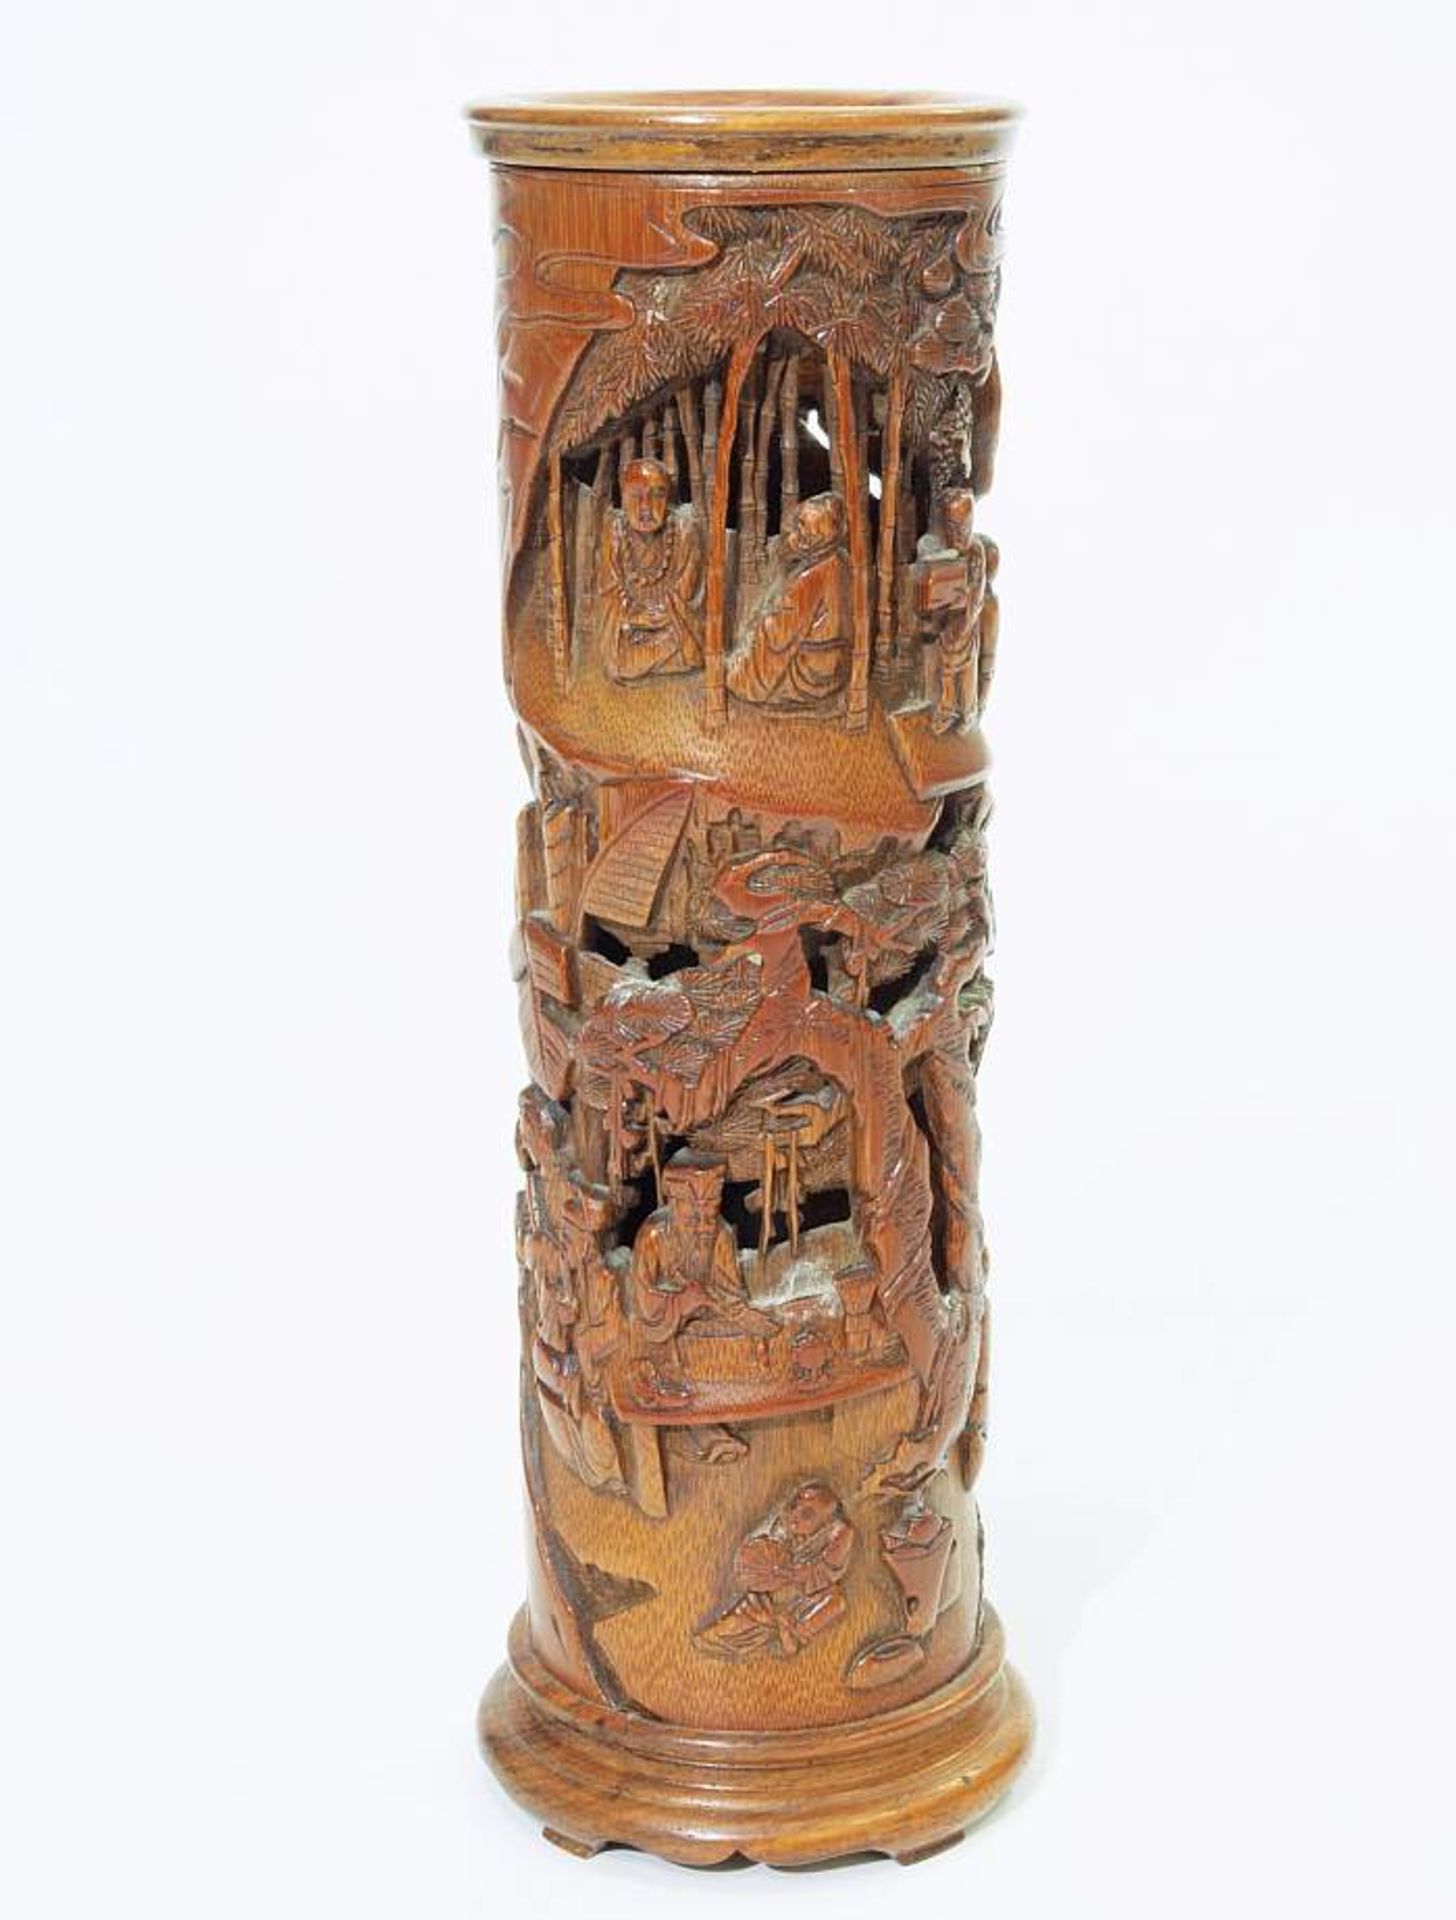 Pinselhalter. Pinselhalter. Asien, 20. Jahrhundert. Holz, zylindrische Form, ganzflächig beschnitzt,